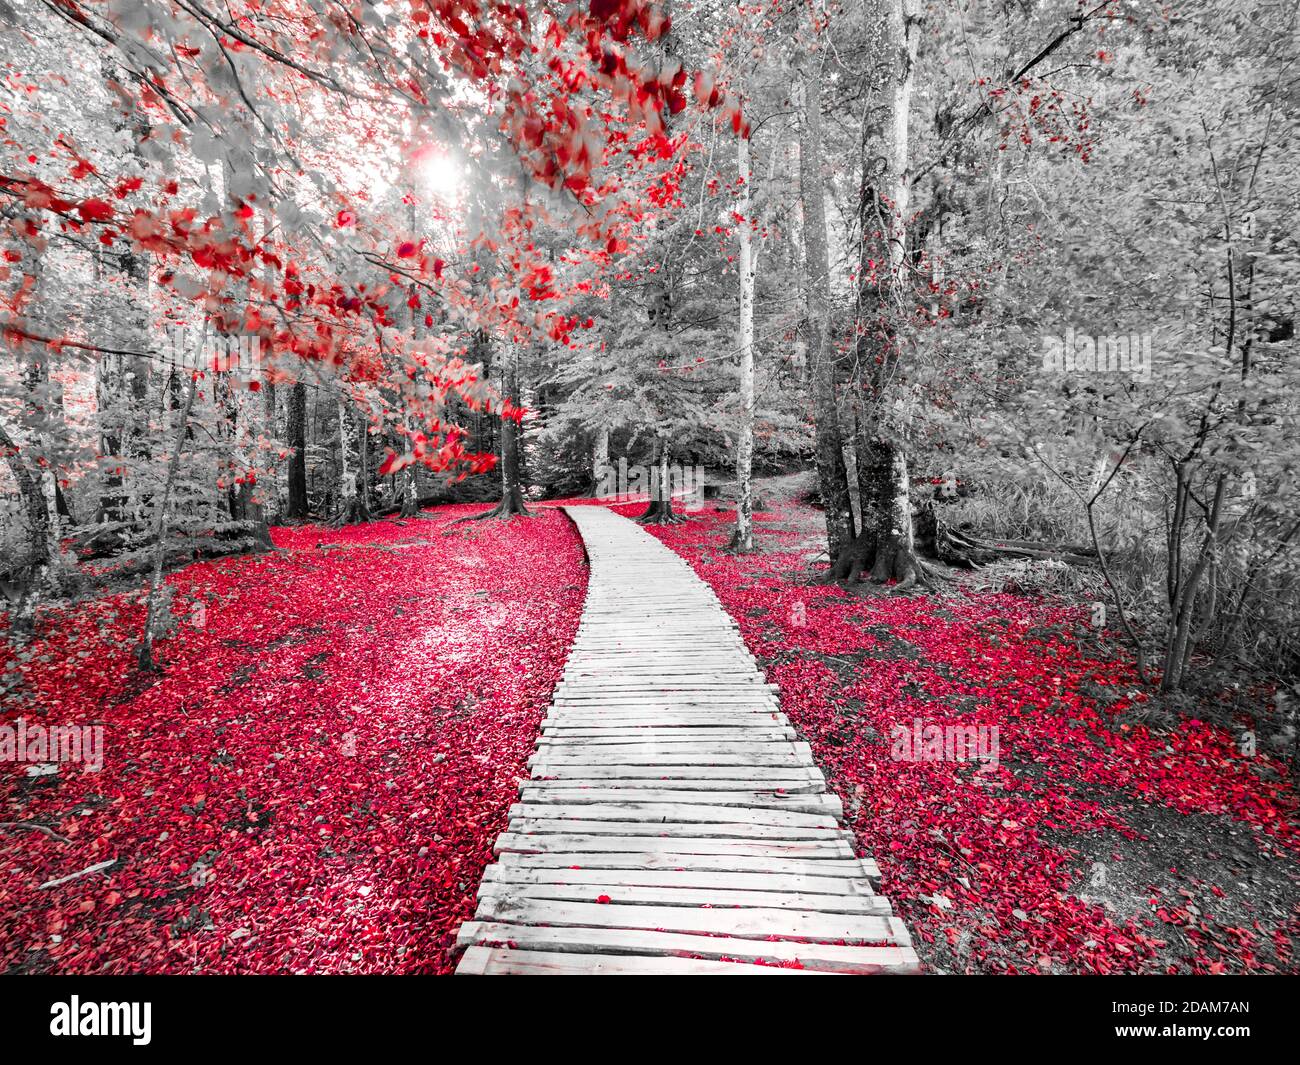 Nationalpark Plitvicer Seen in Kroatien Europa veränderte Farbe Rot Mix mit monochromem S&W Stockfoto